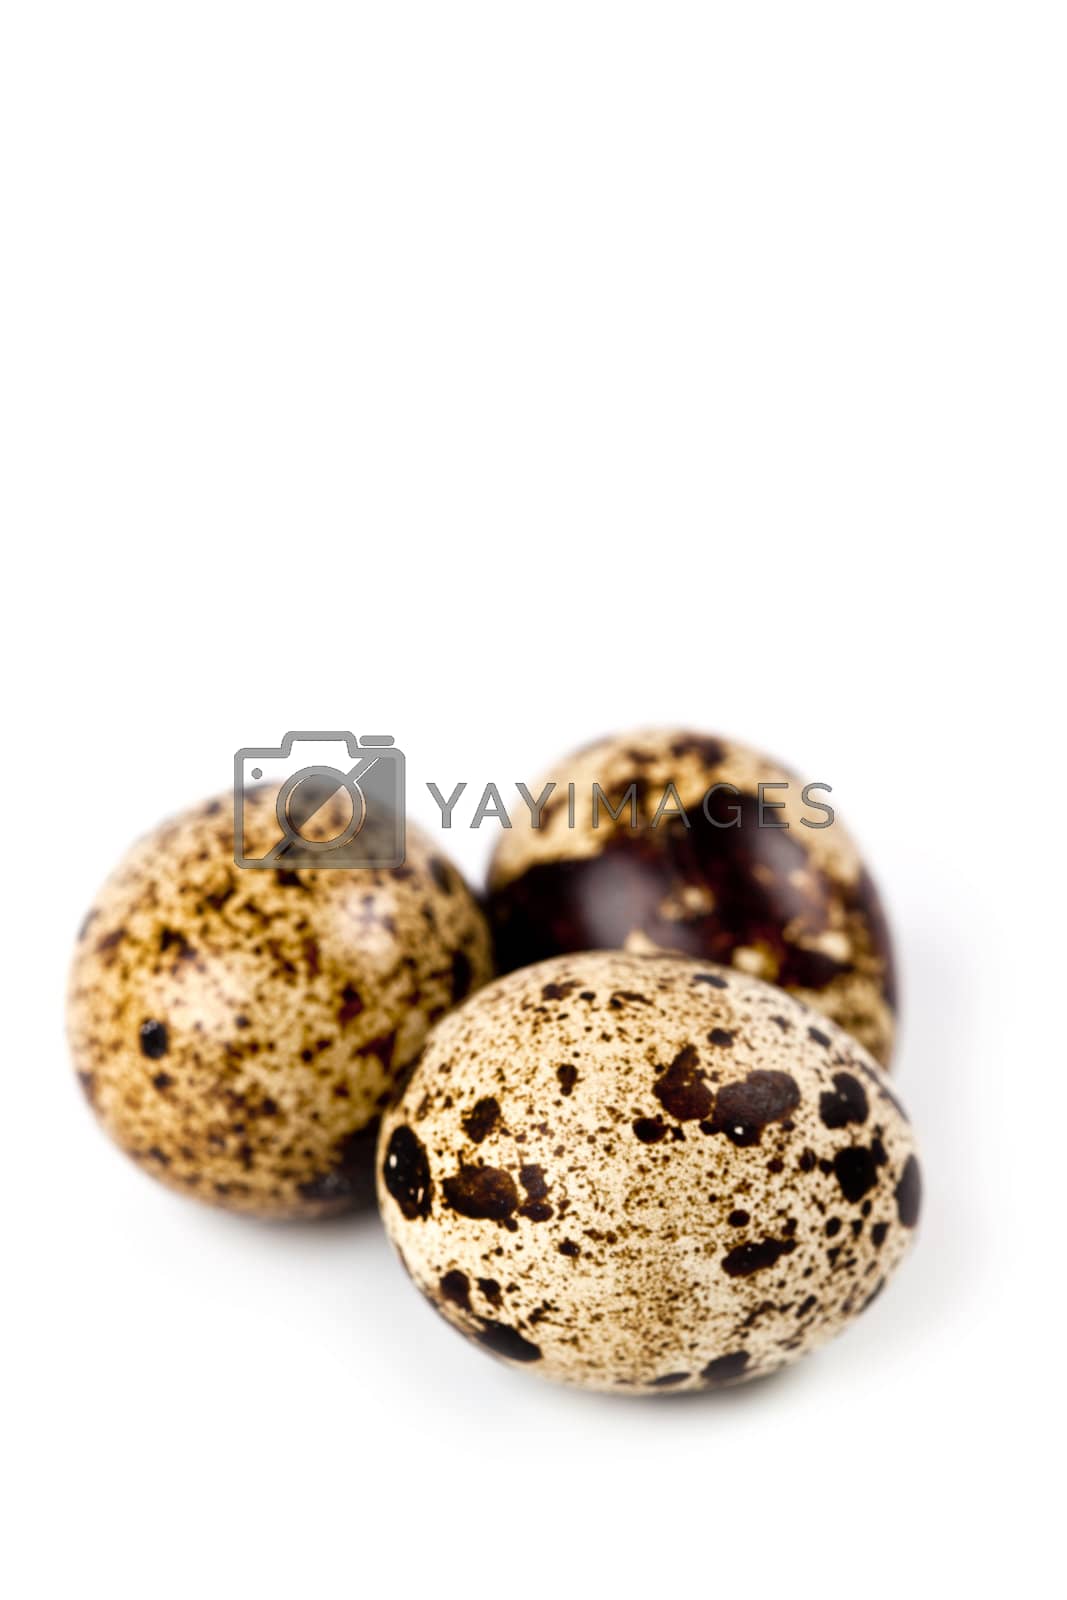 Royalty free image of three quail eggs by marylooo